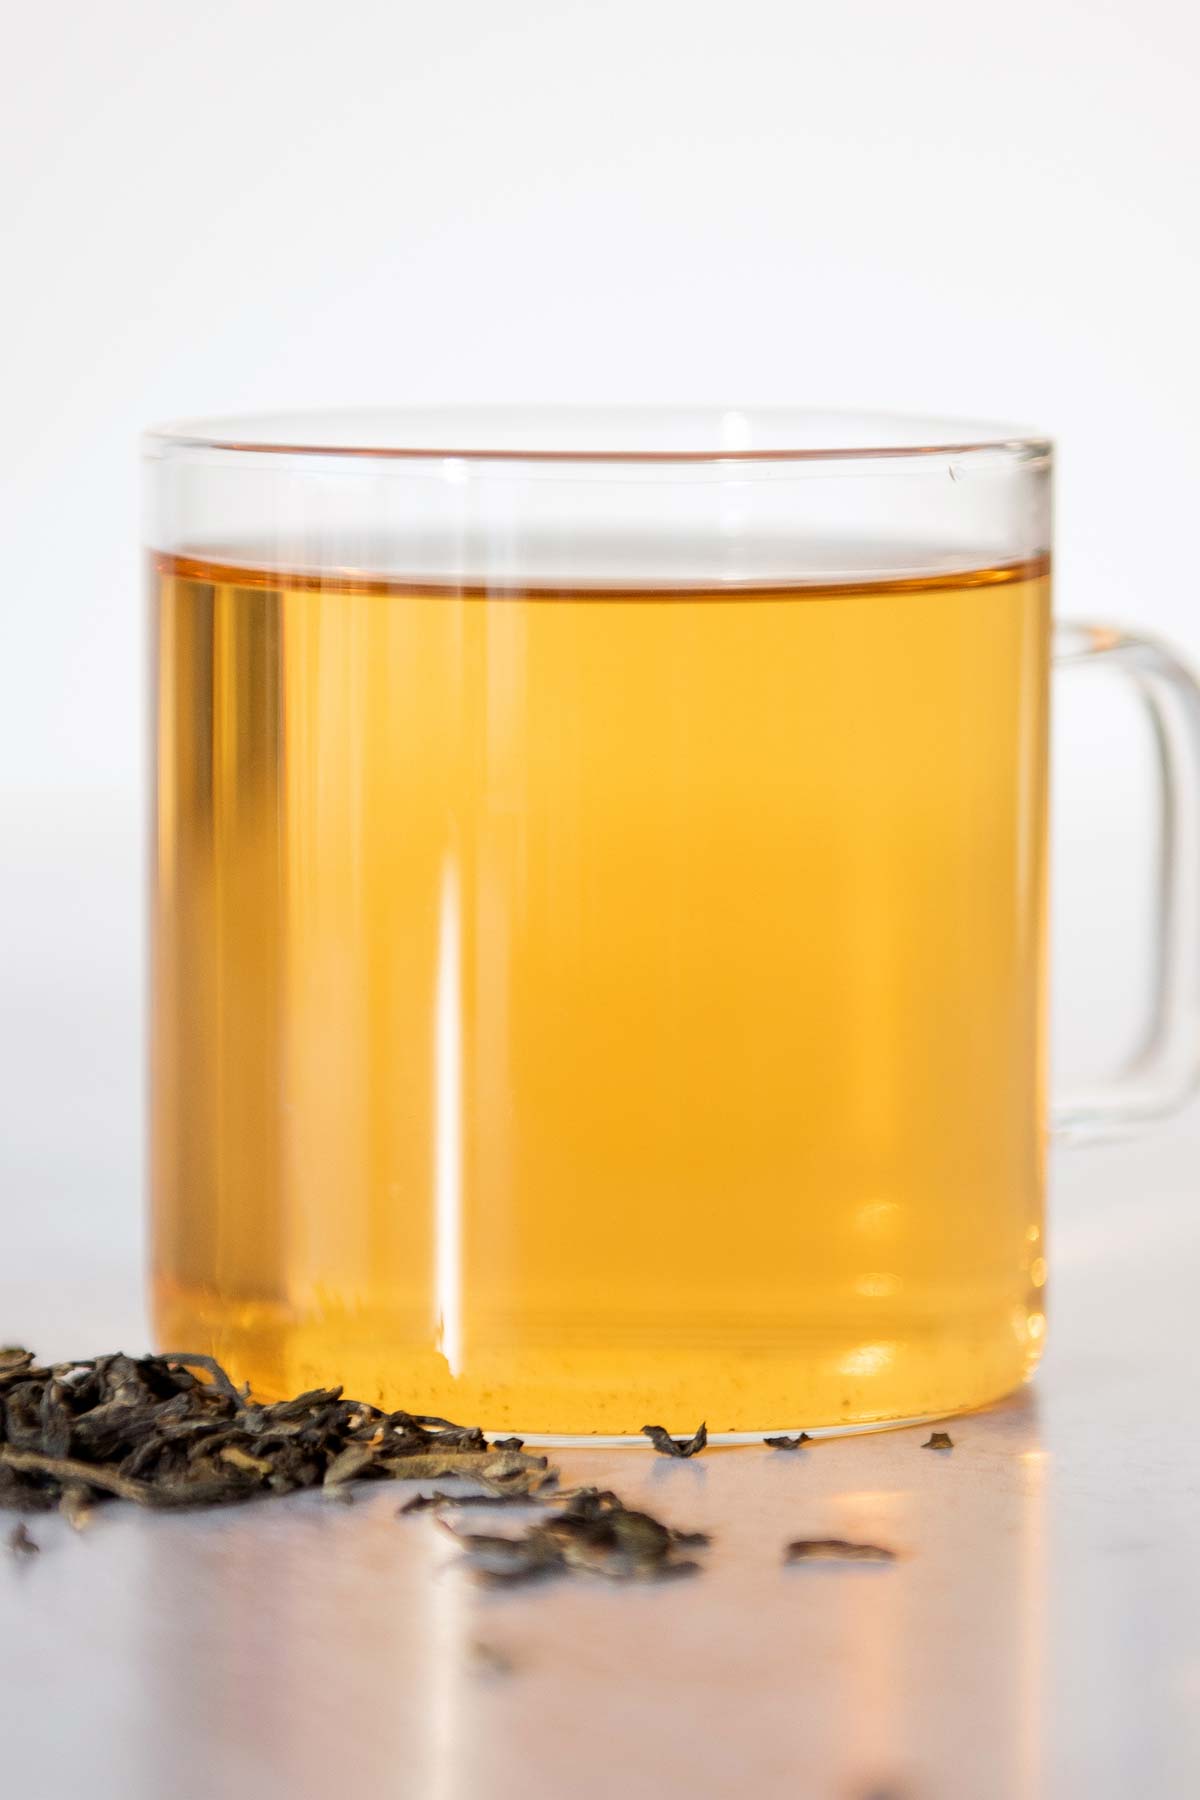 Hot jasmine tea in a cup.